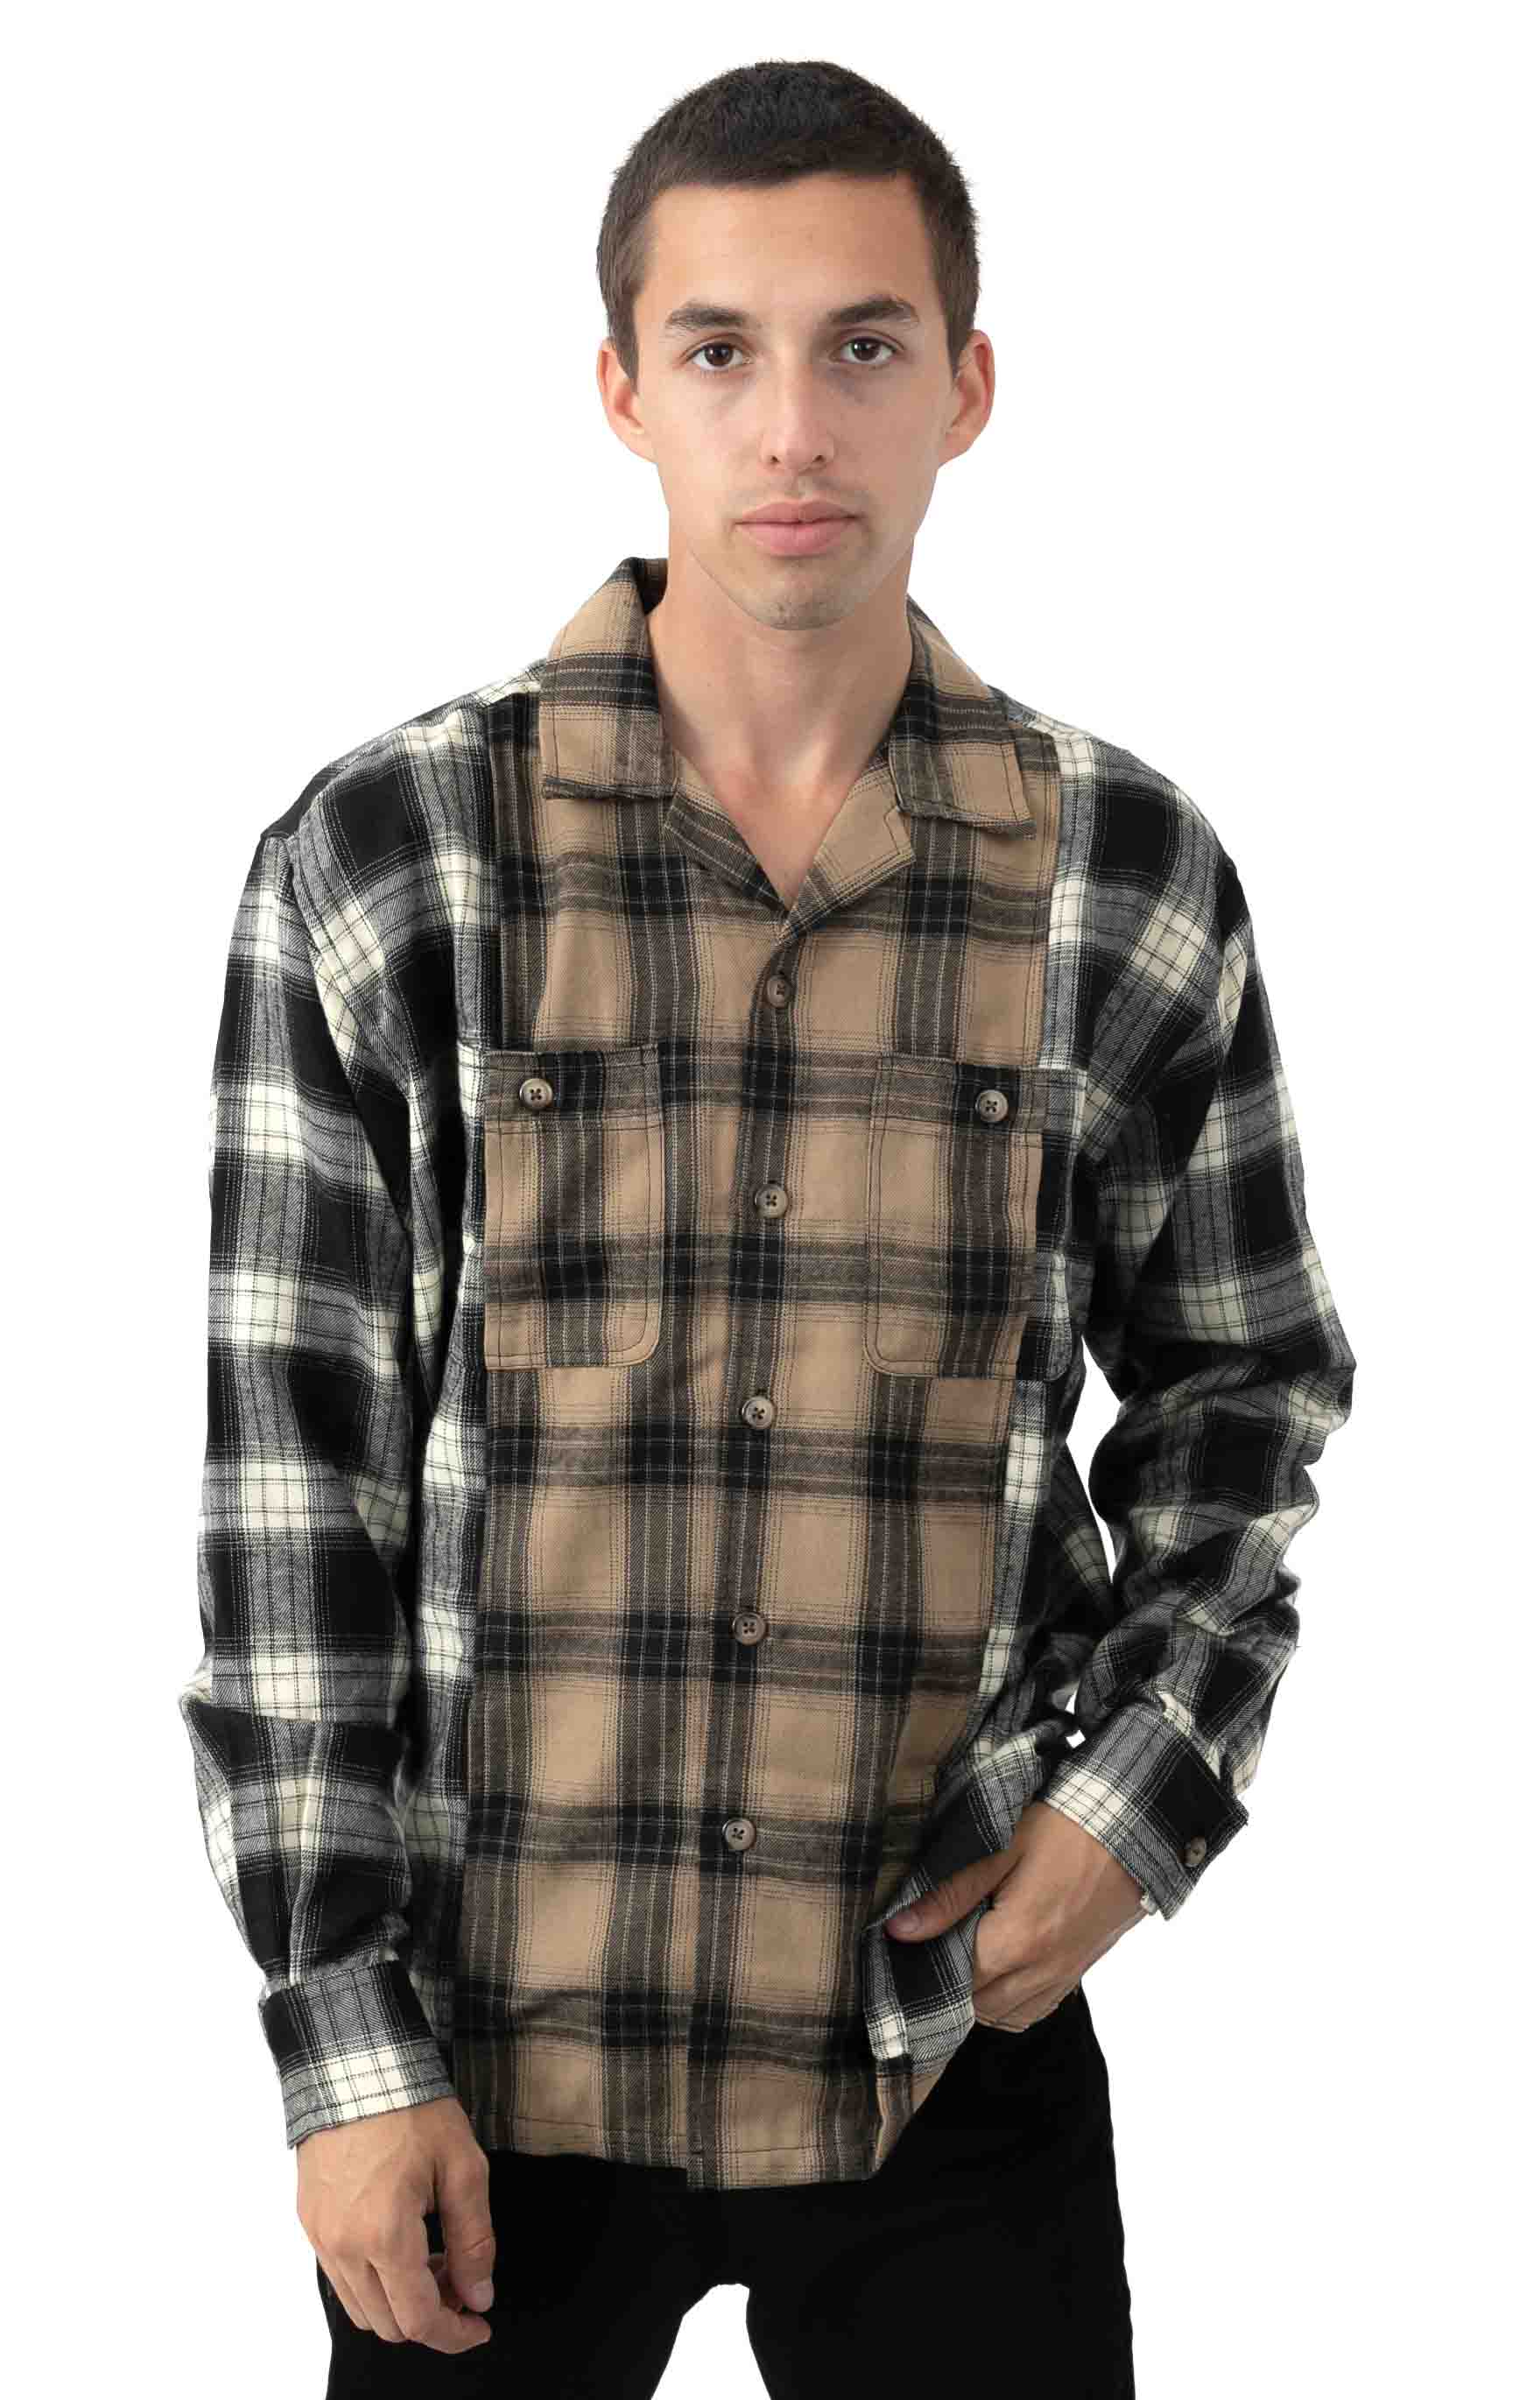 Collide Flannel Button-Up Shirt